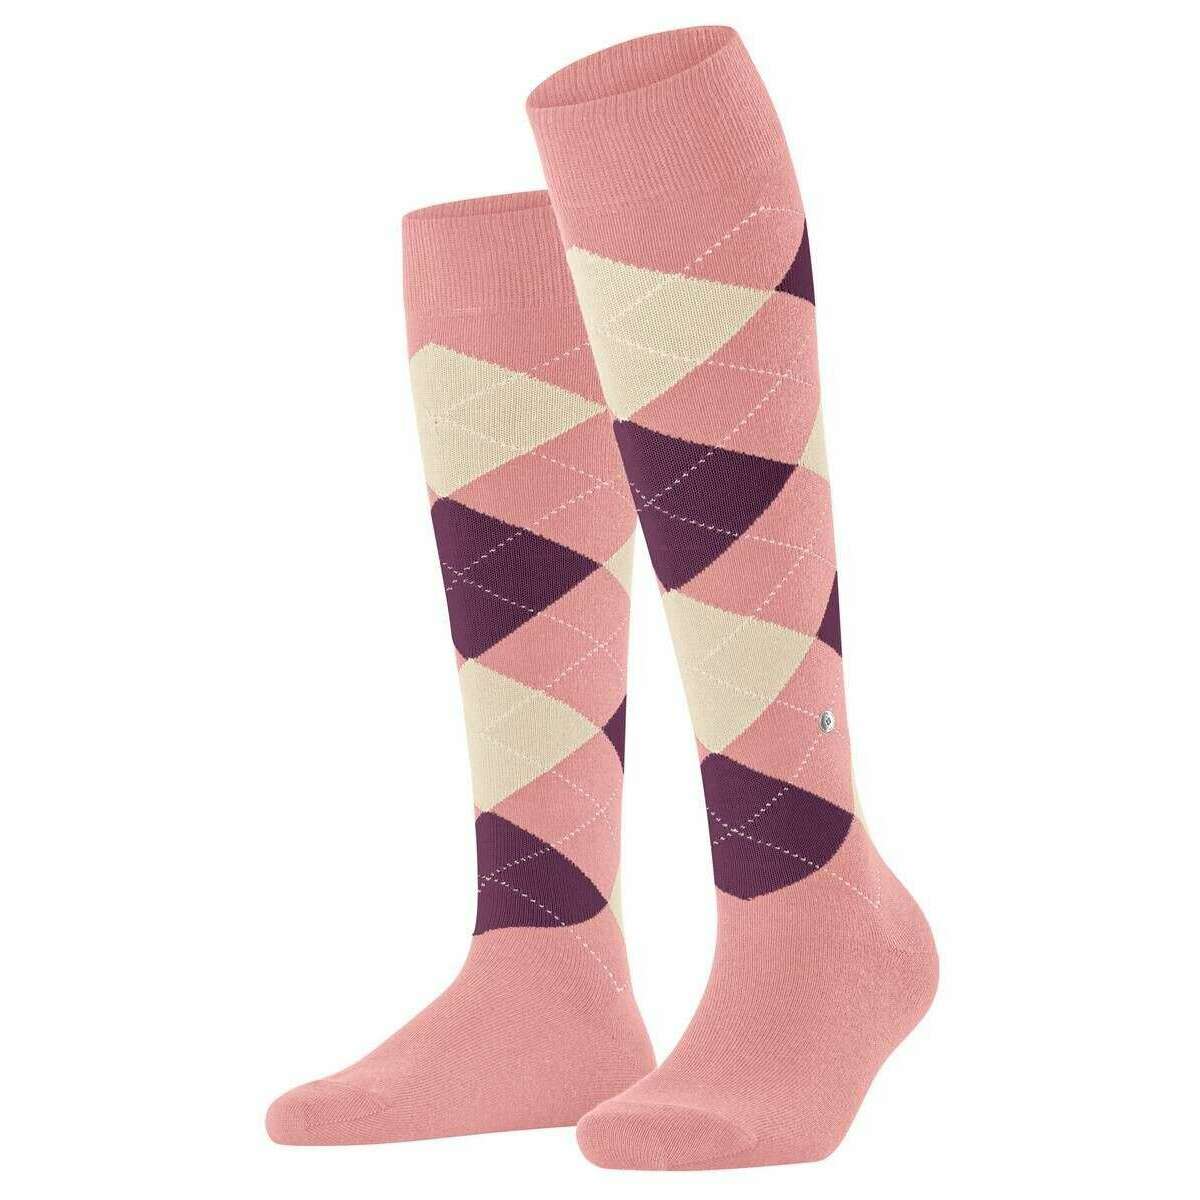 Burlington Queen Knee High Socks - Rioja Pink